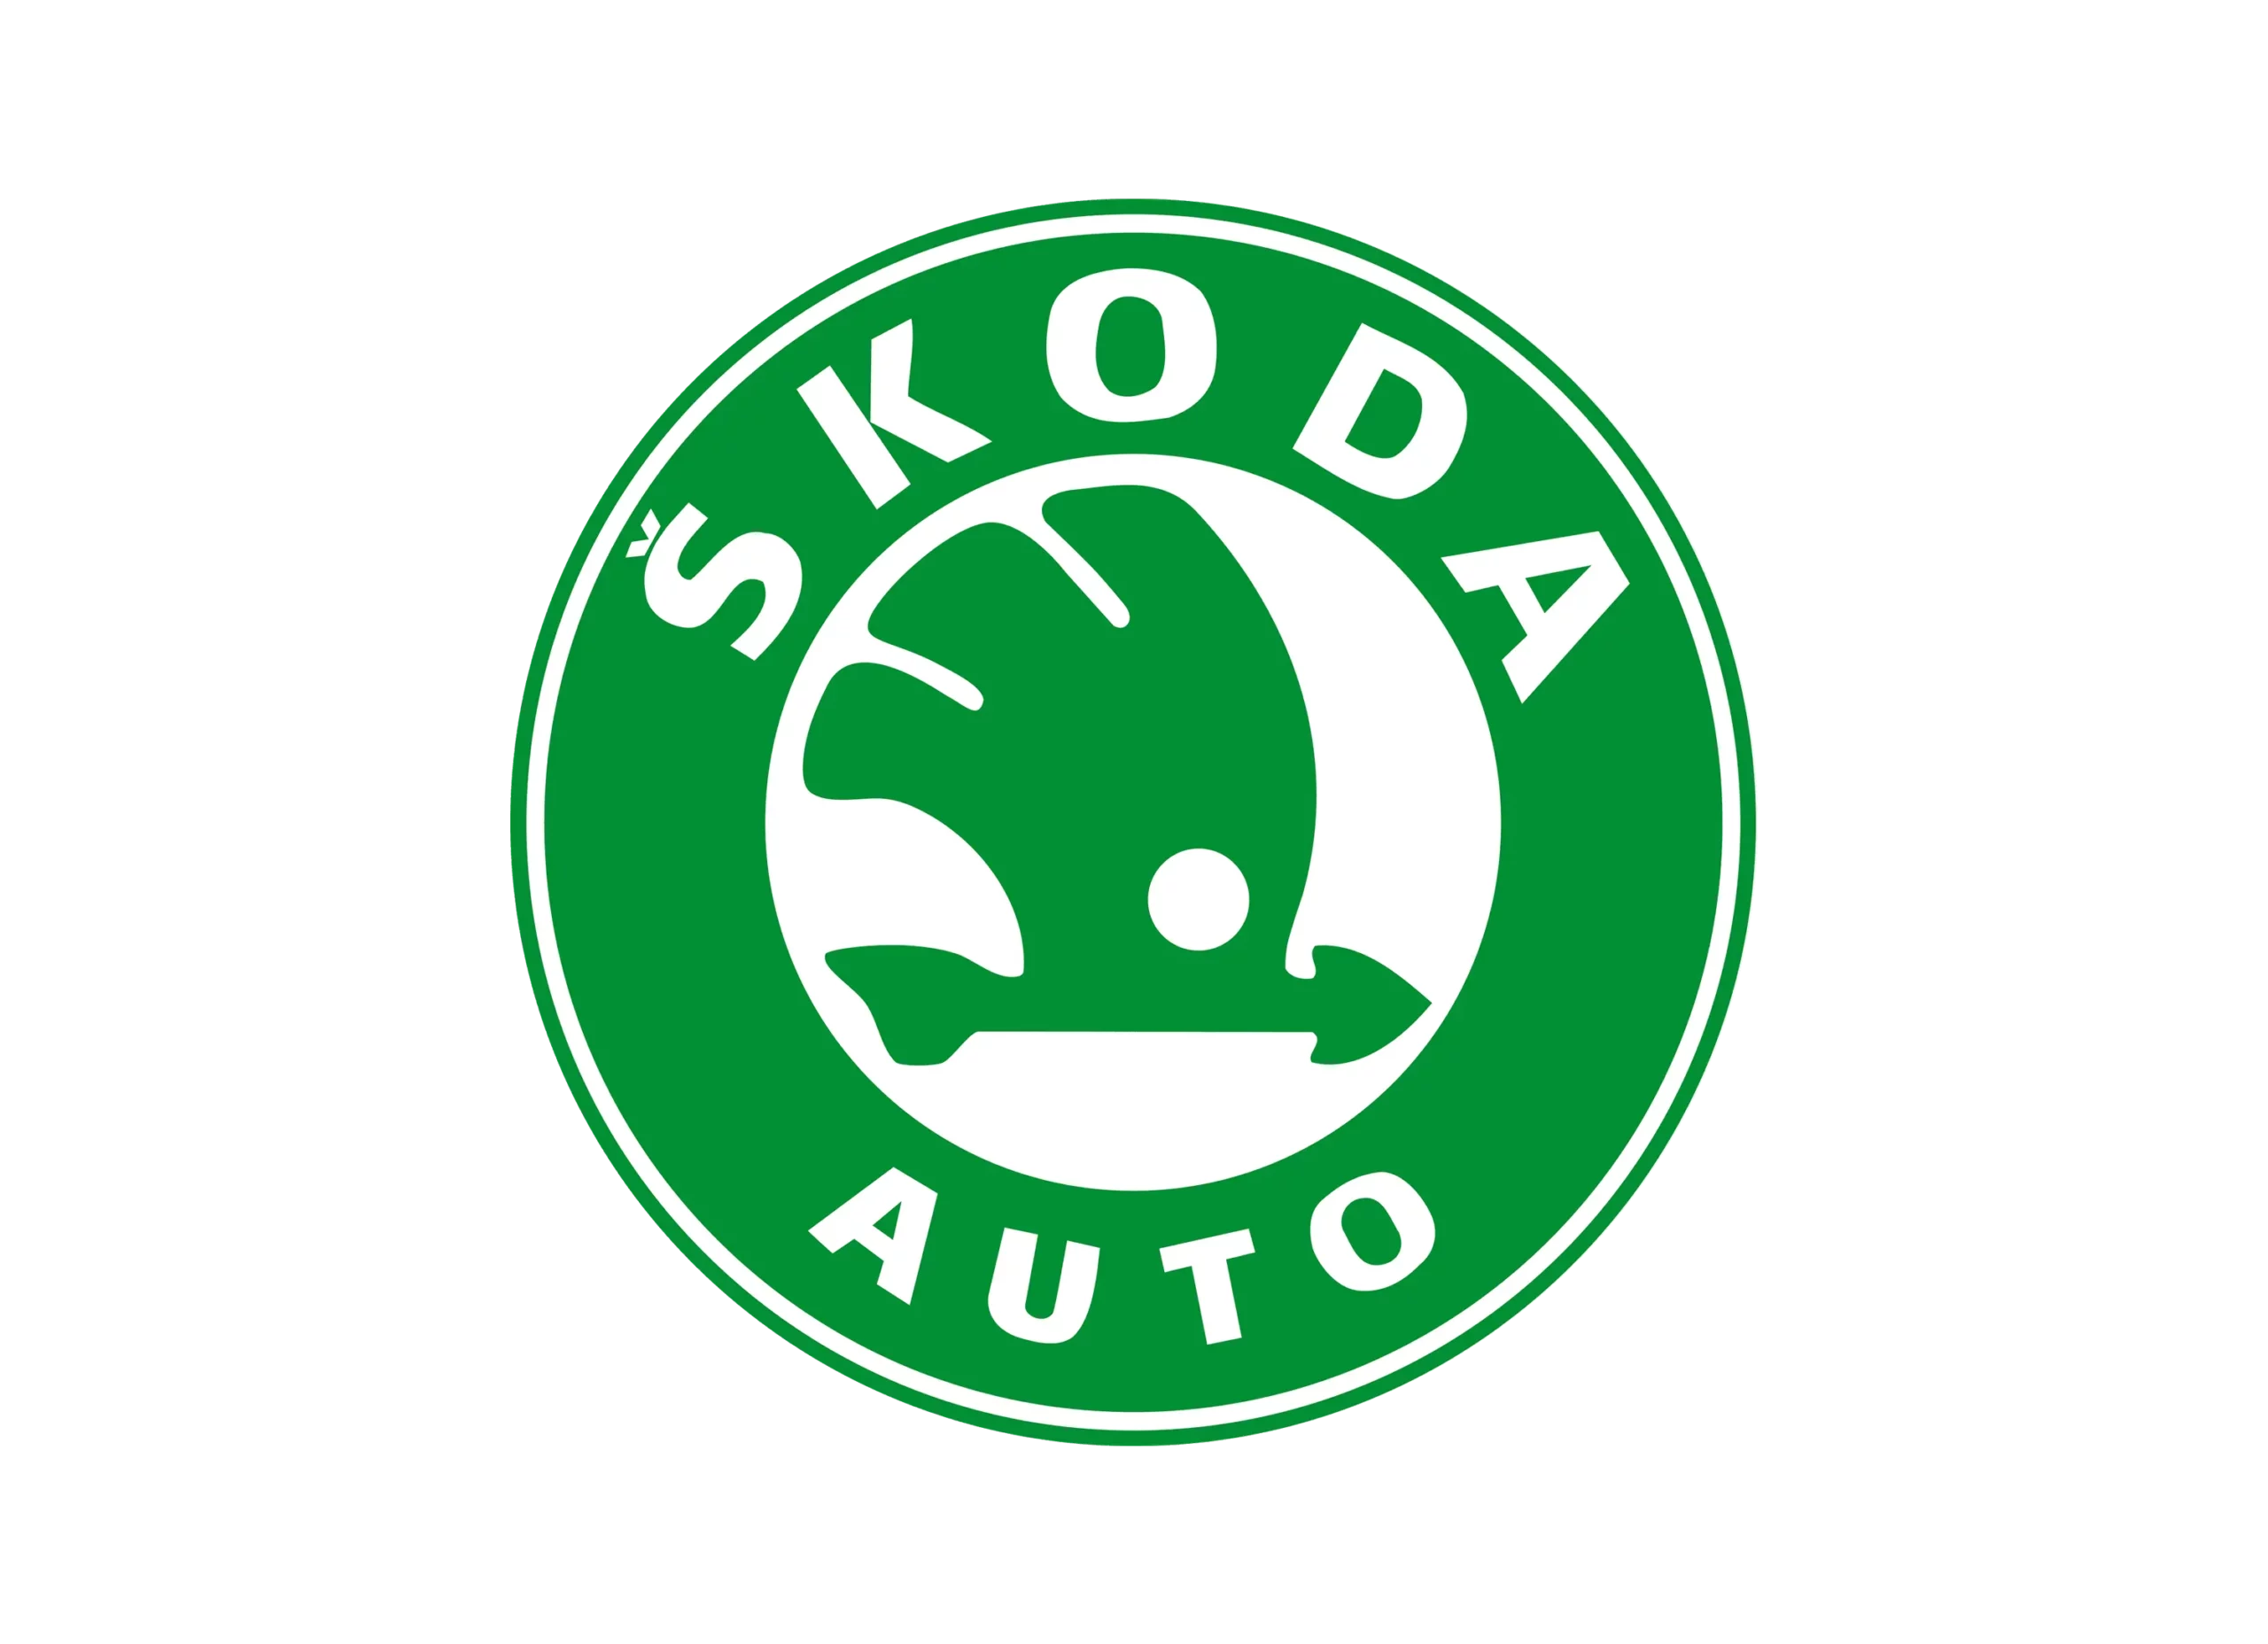 Skoda logo 1993-1999